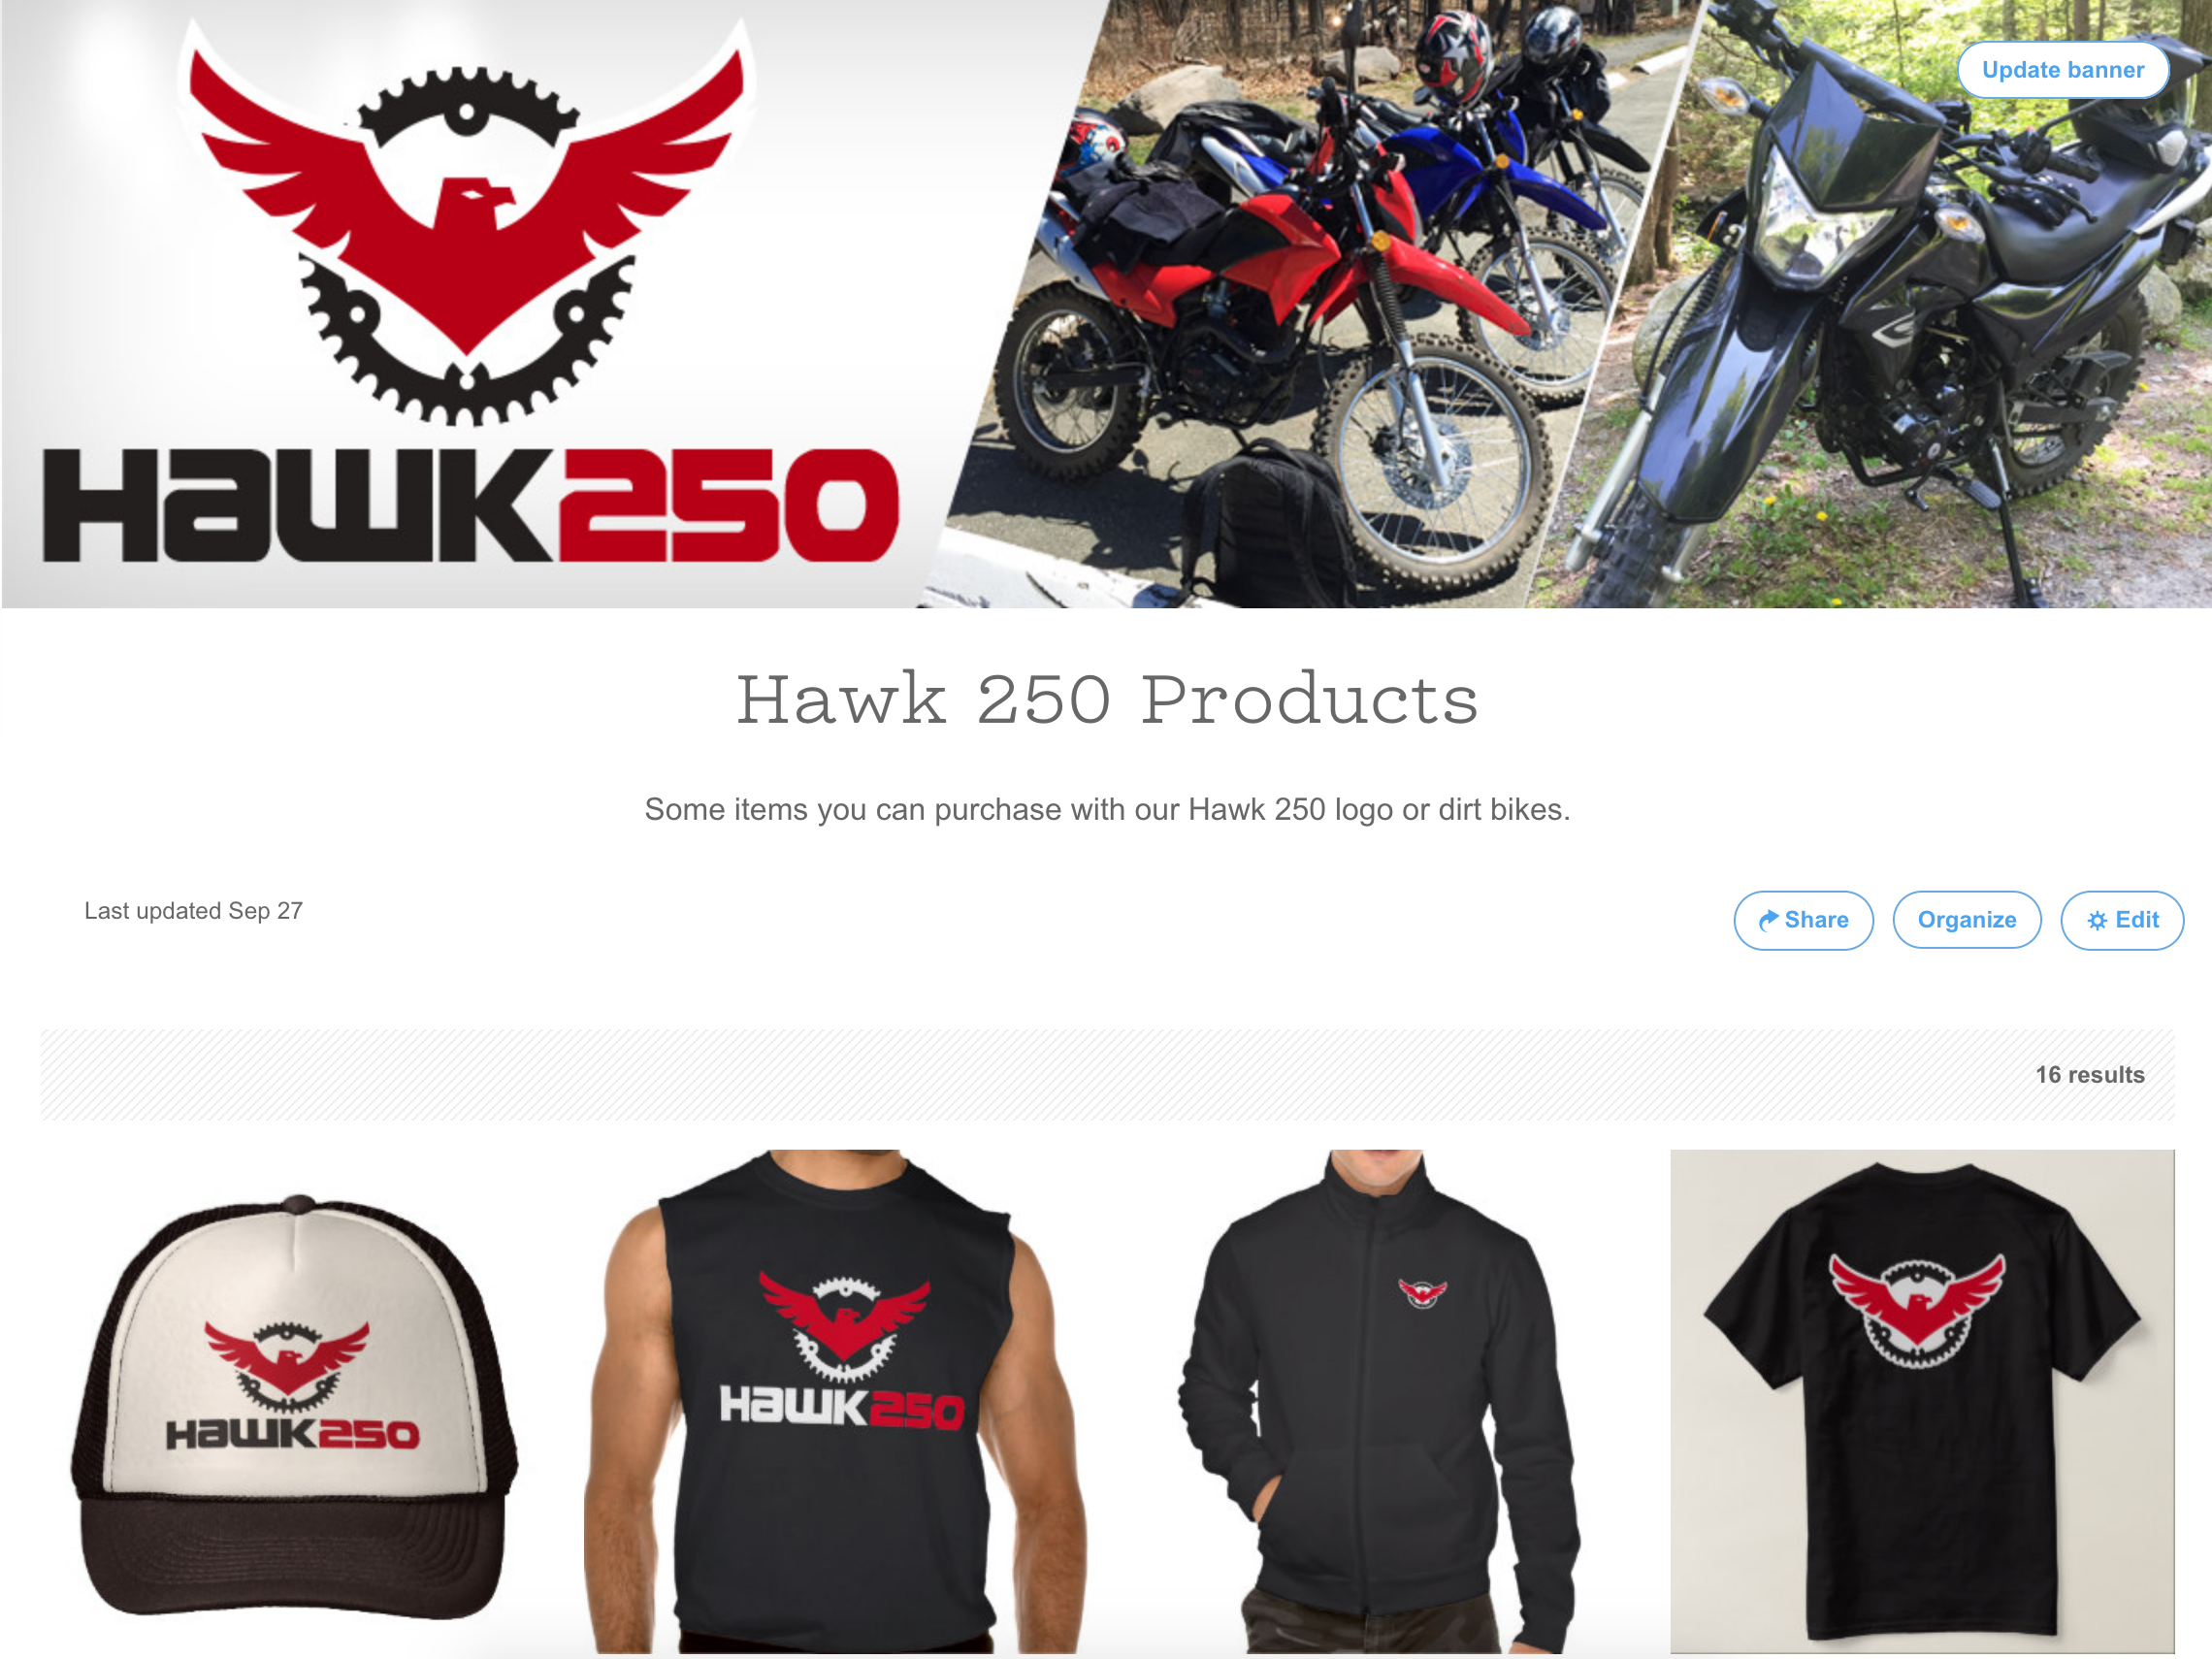 New Zazzle Shop for Hawk 250 Apparel and Accessories